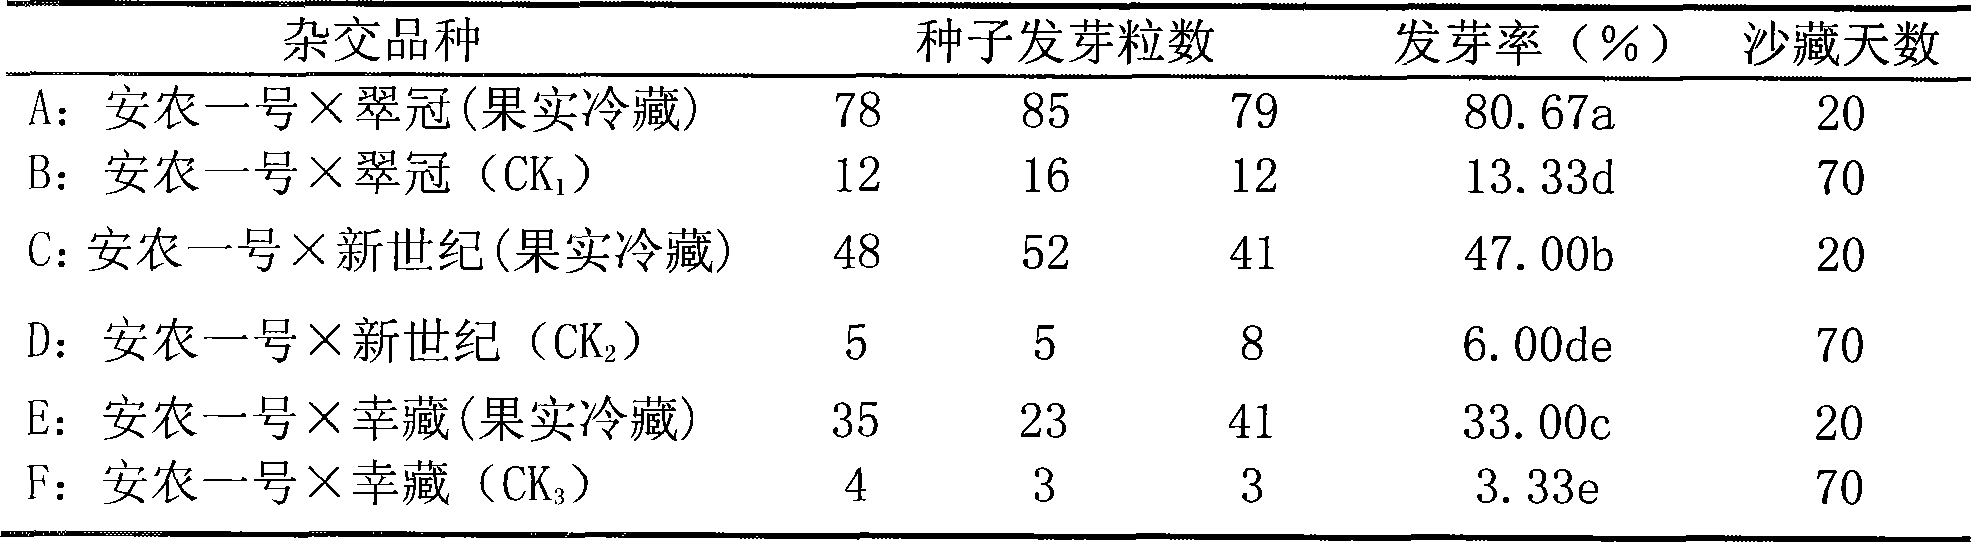 Germinating breeding method of Chinese pear cross-breed